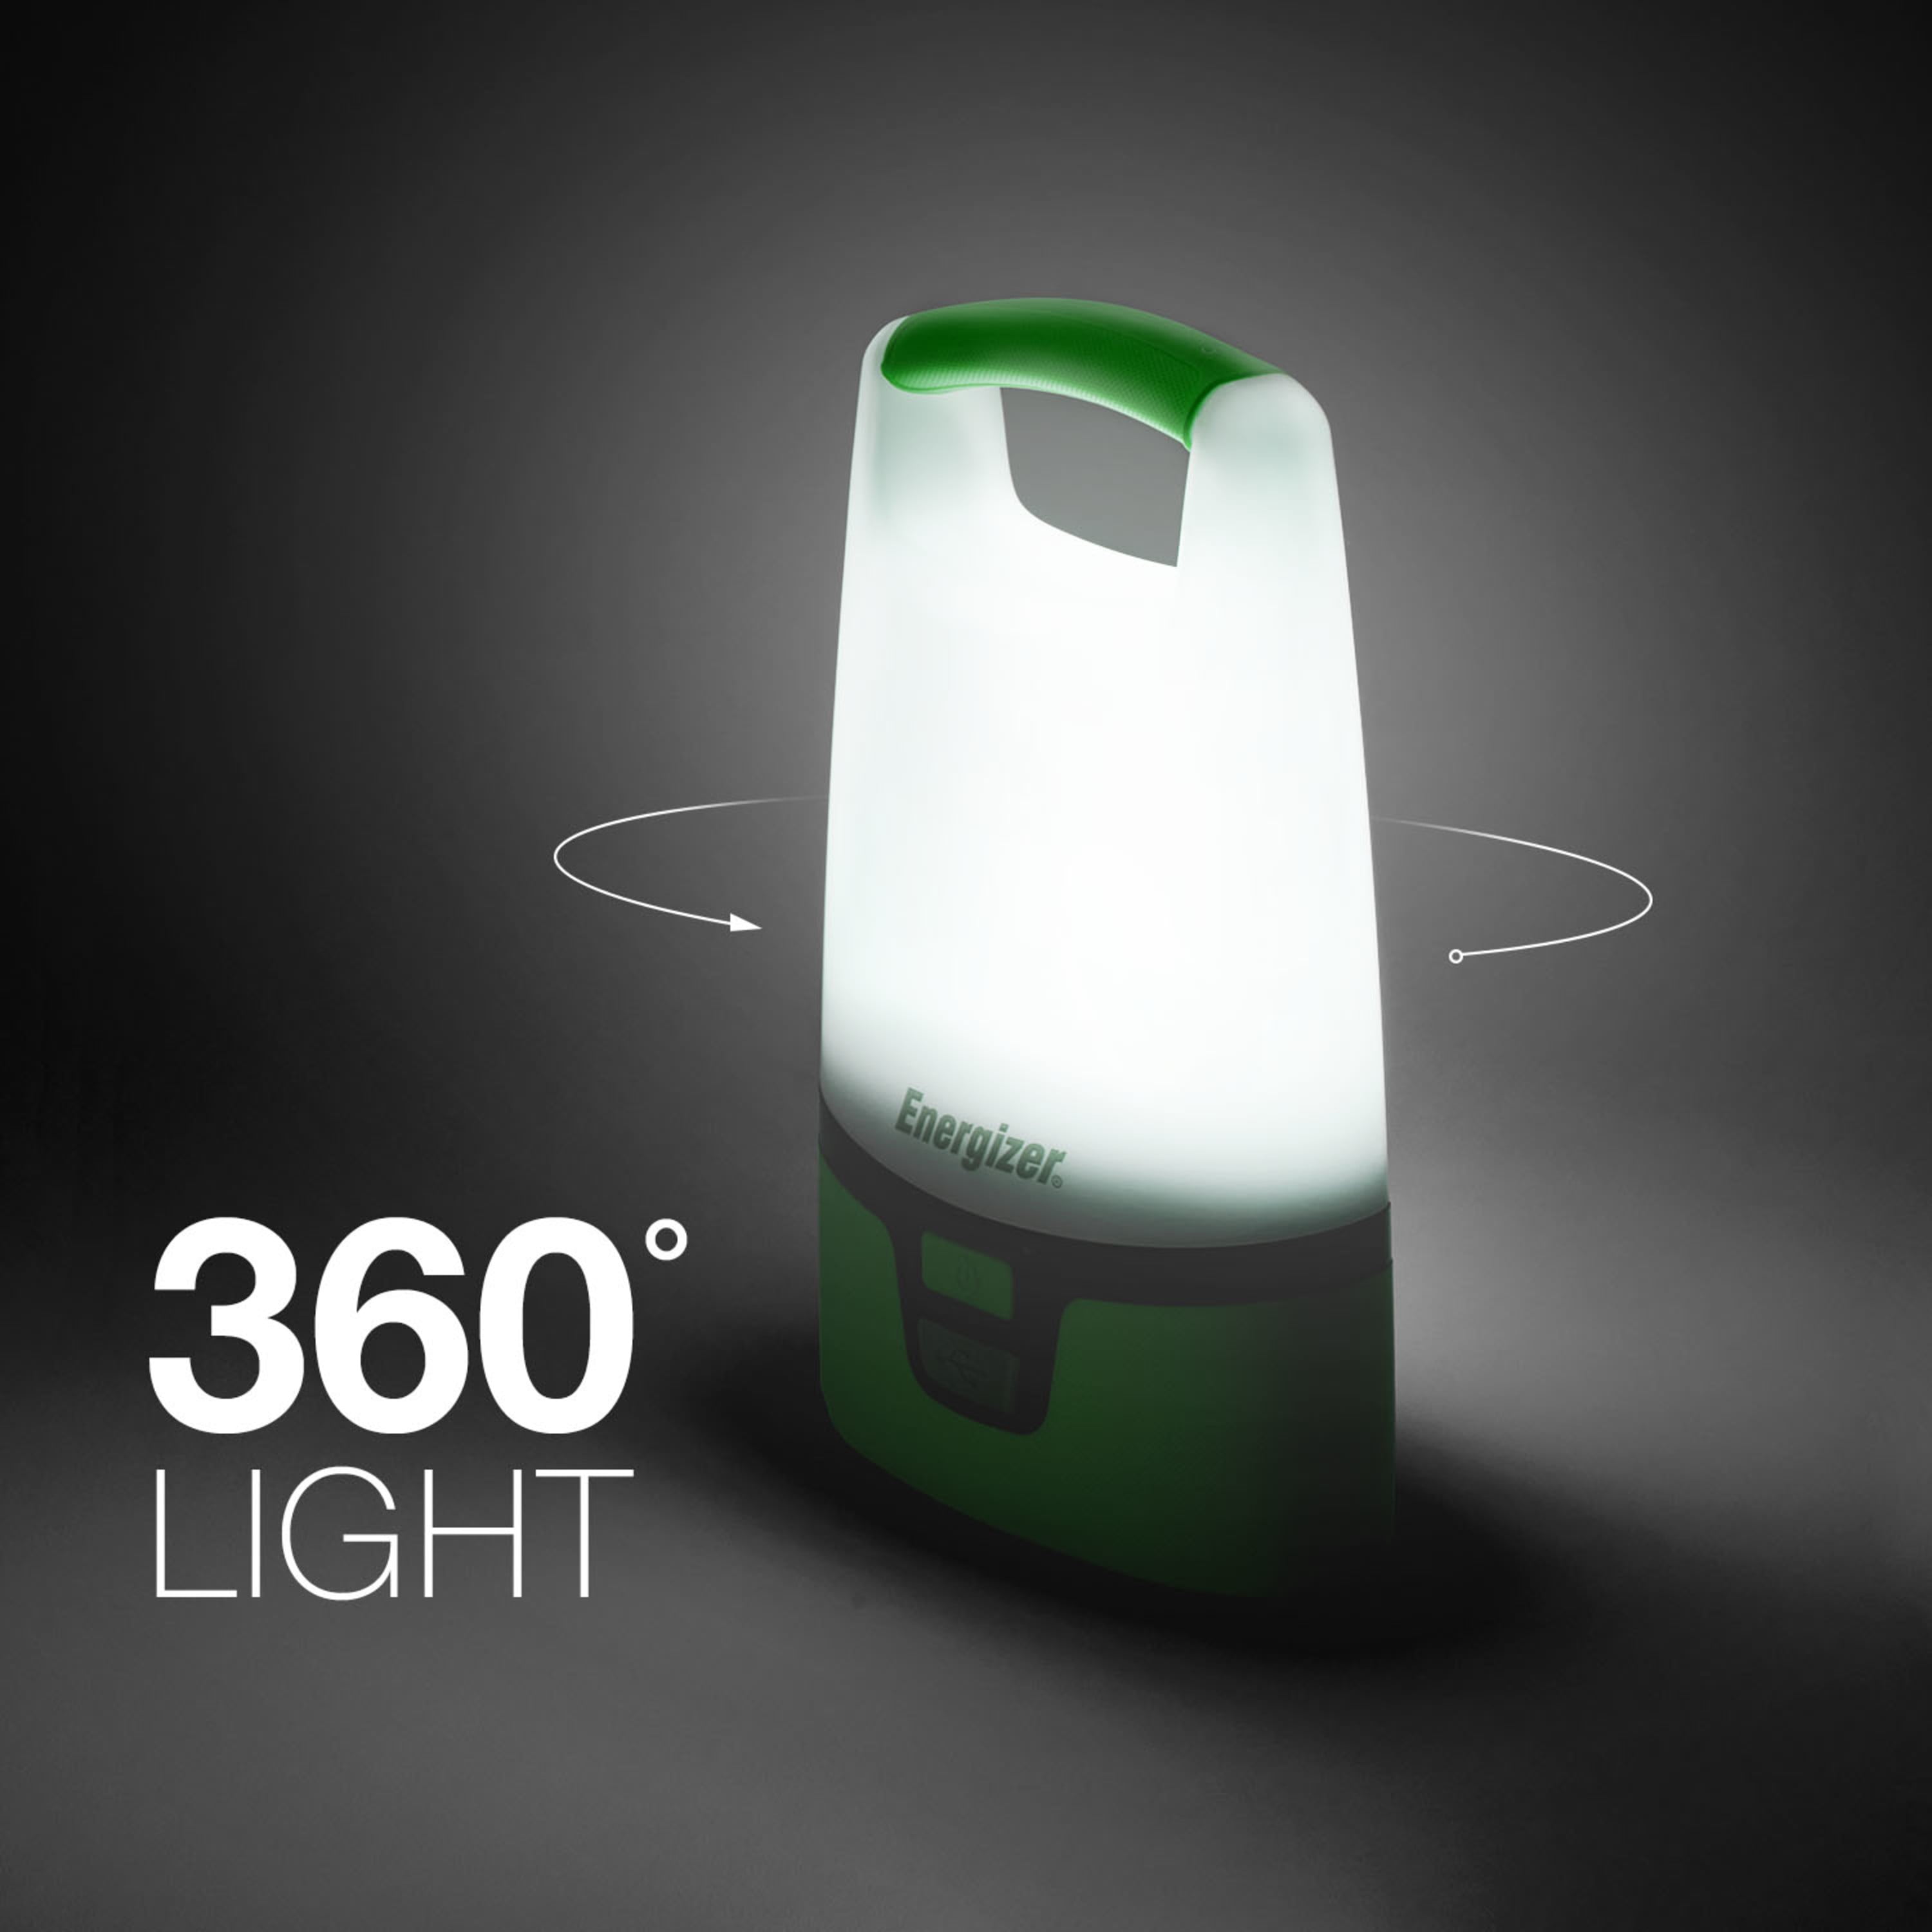 Energizer Vision LED Lantern, Versatile Camping Lantern, Emergency Light or Outdoor Light, USB Port to Charge Devices, Men's